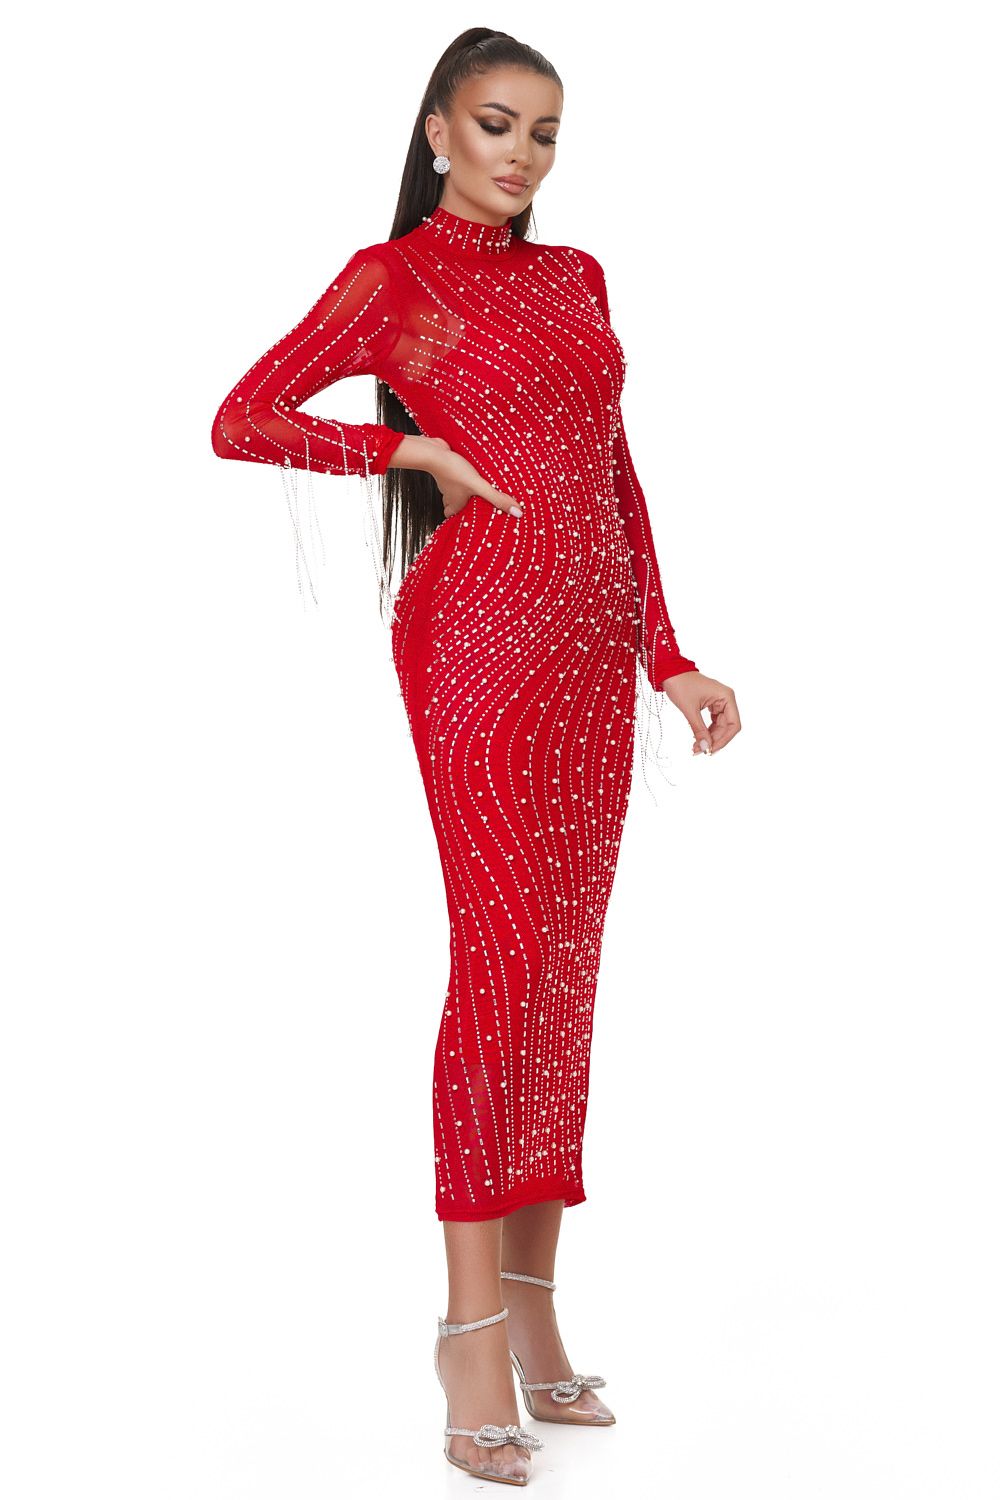 Radisea Bogas hosszú piros női ruha